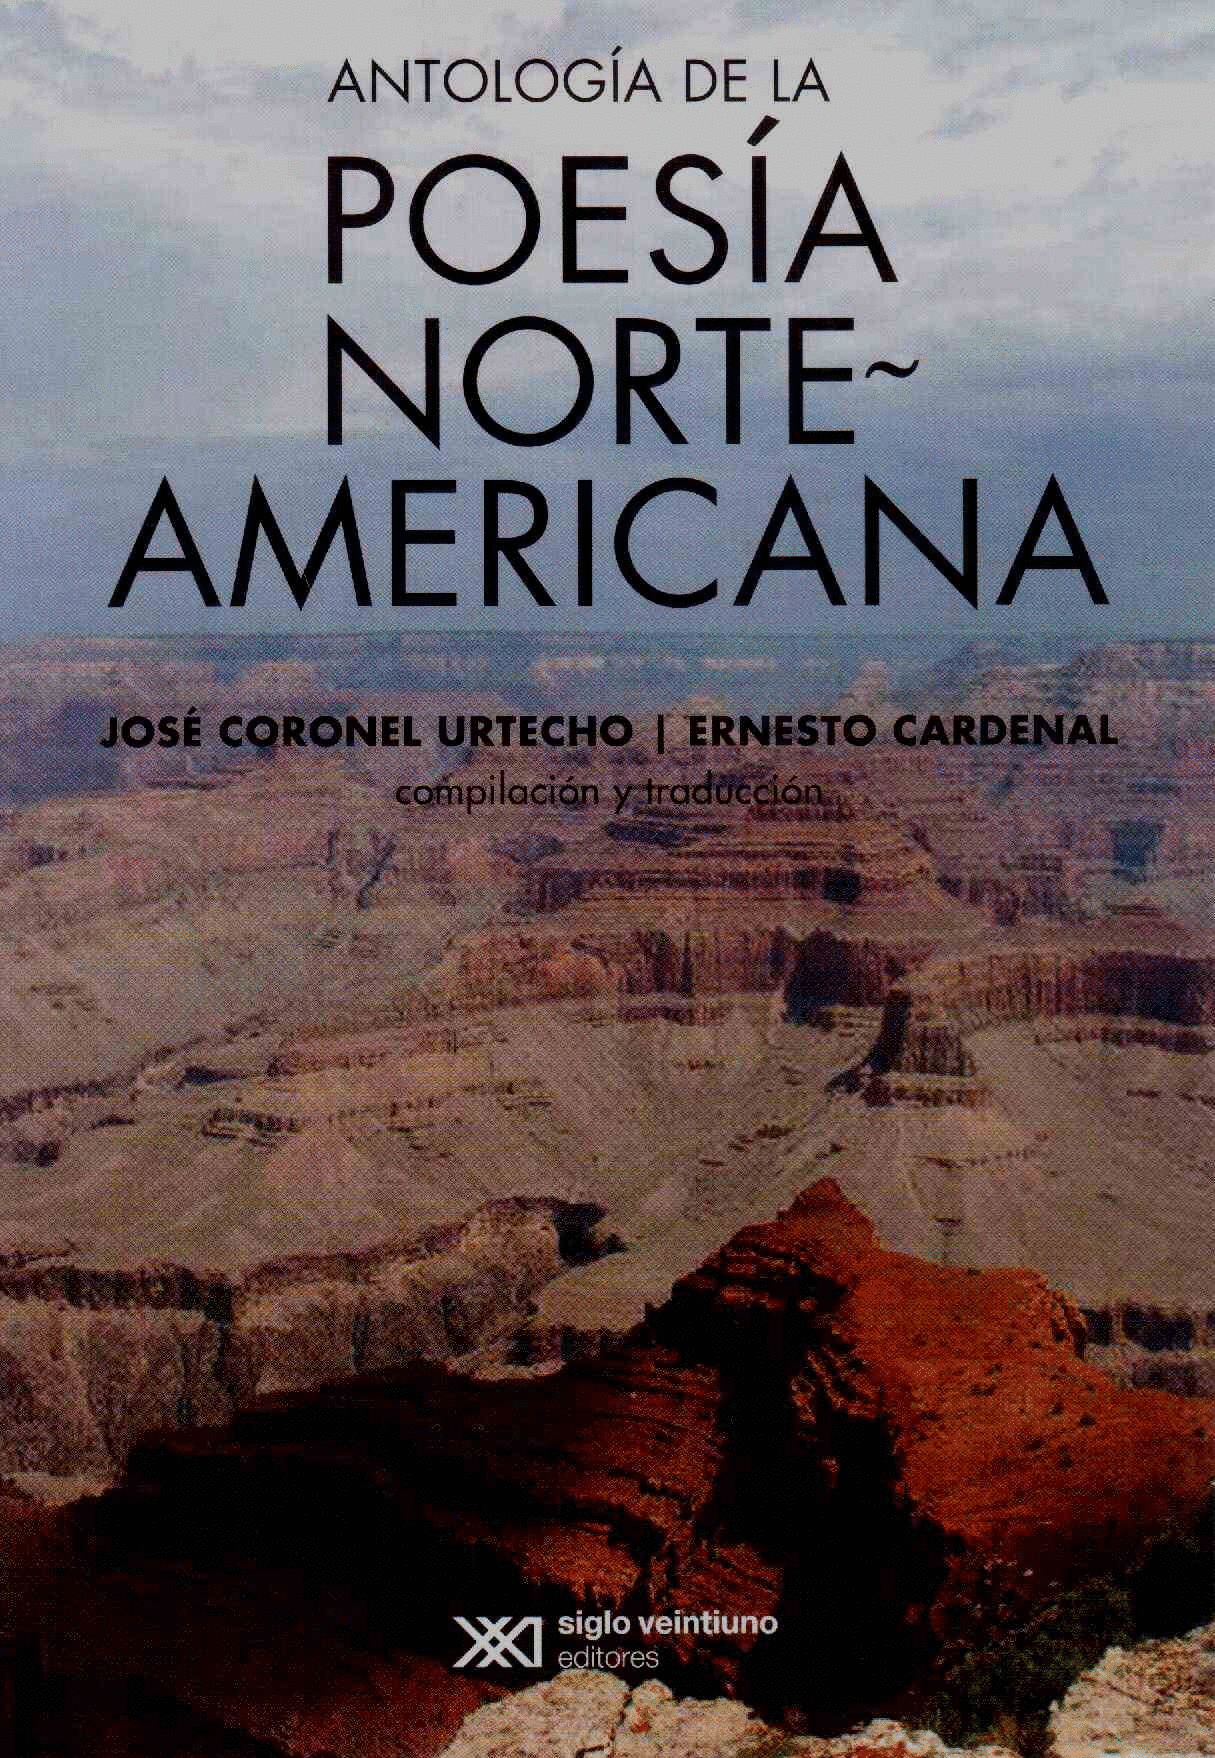 ANTOLOGIA DE LA POESIA NORTE AMERICANA